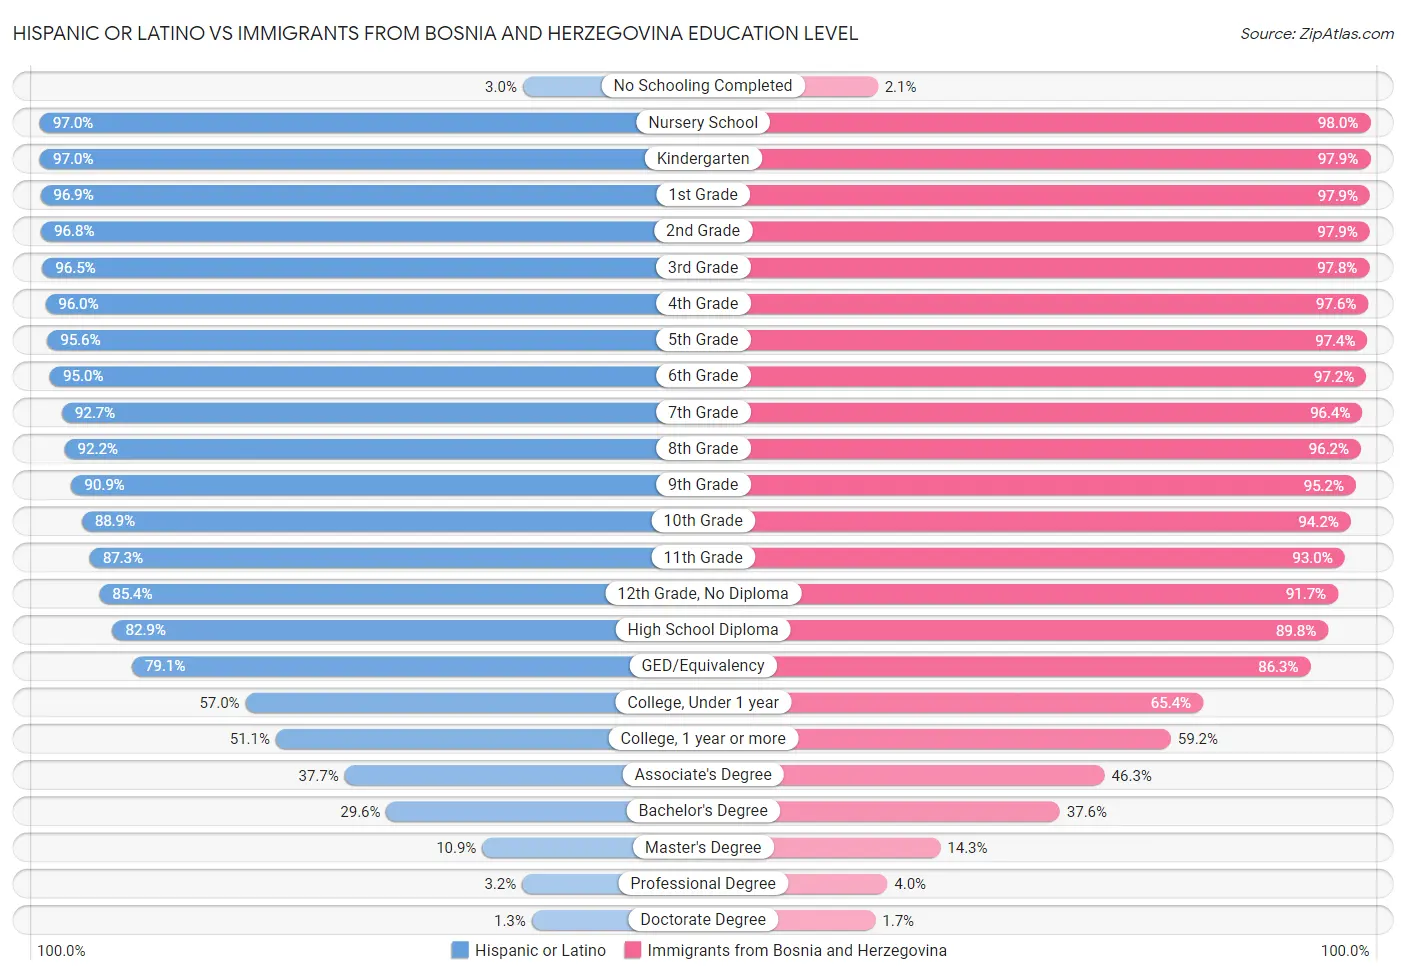 Hispanic or Latino vs Immigrants from Bosnia and Herzegovina Education Level